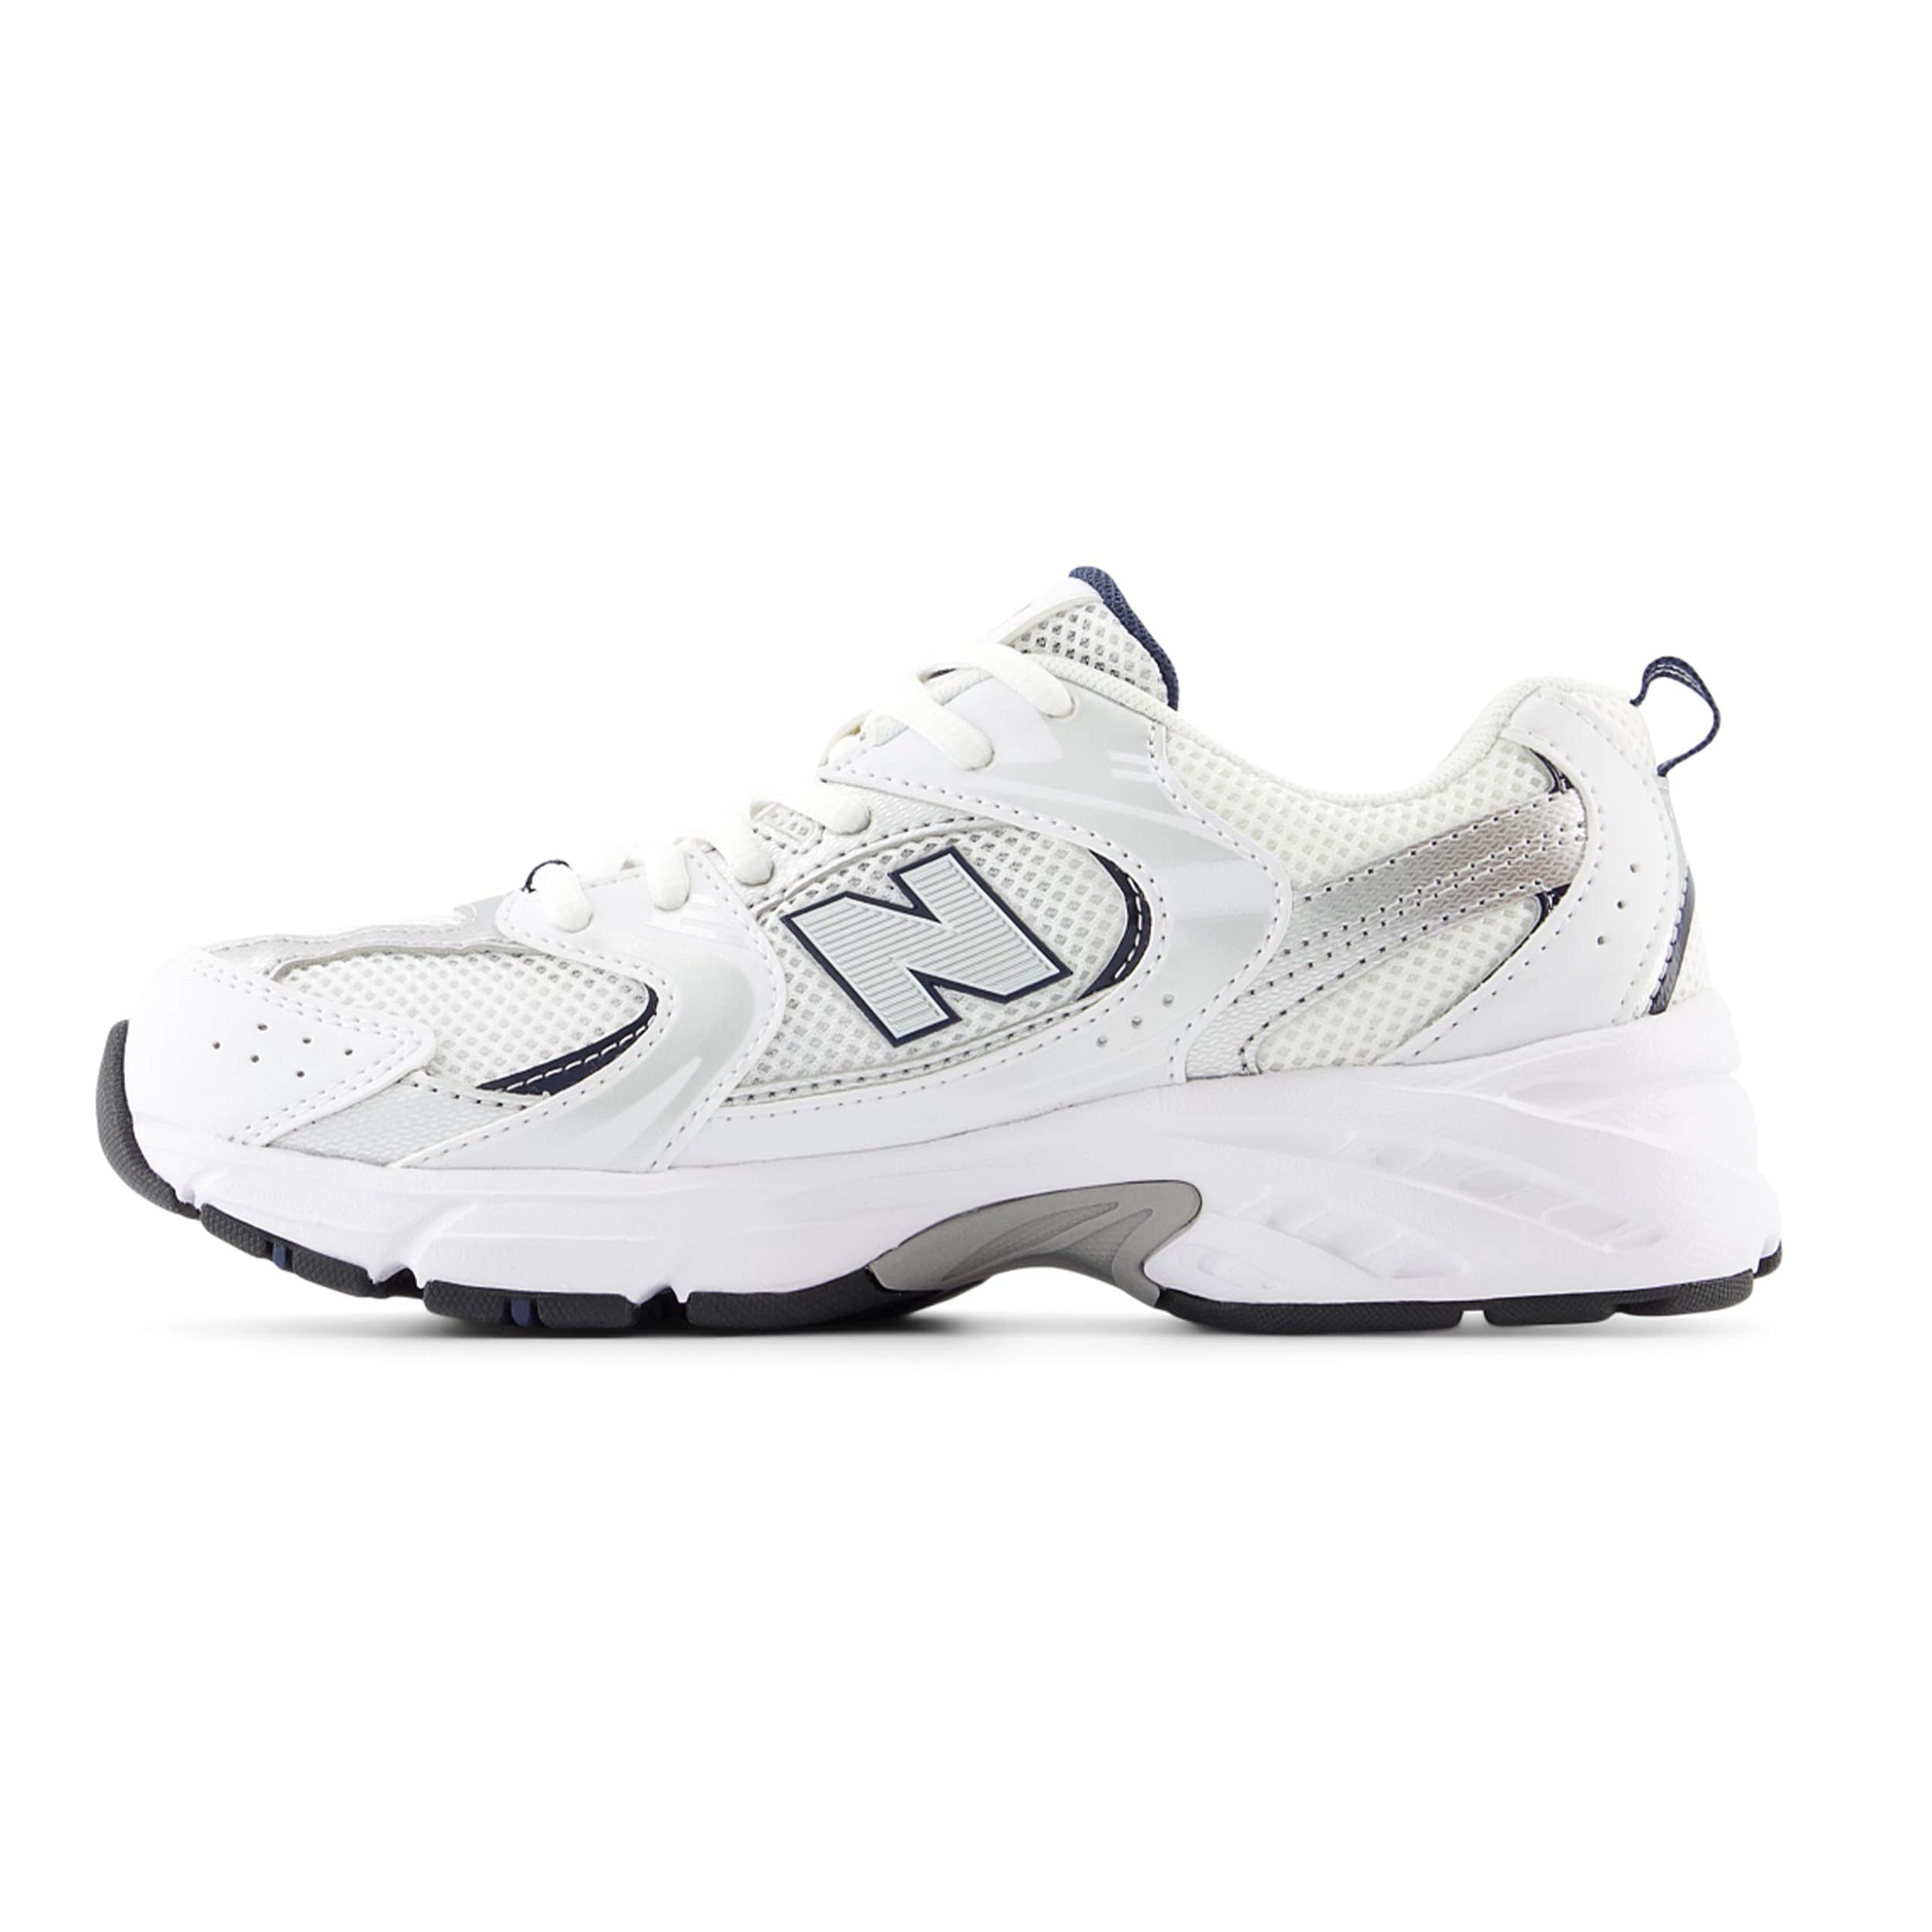 New Balance 530 Sneaker White Natural Indigo